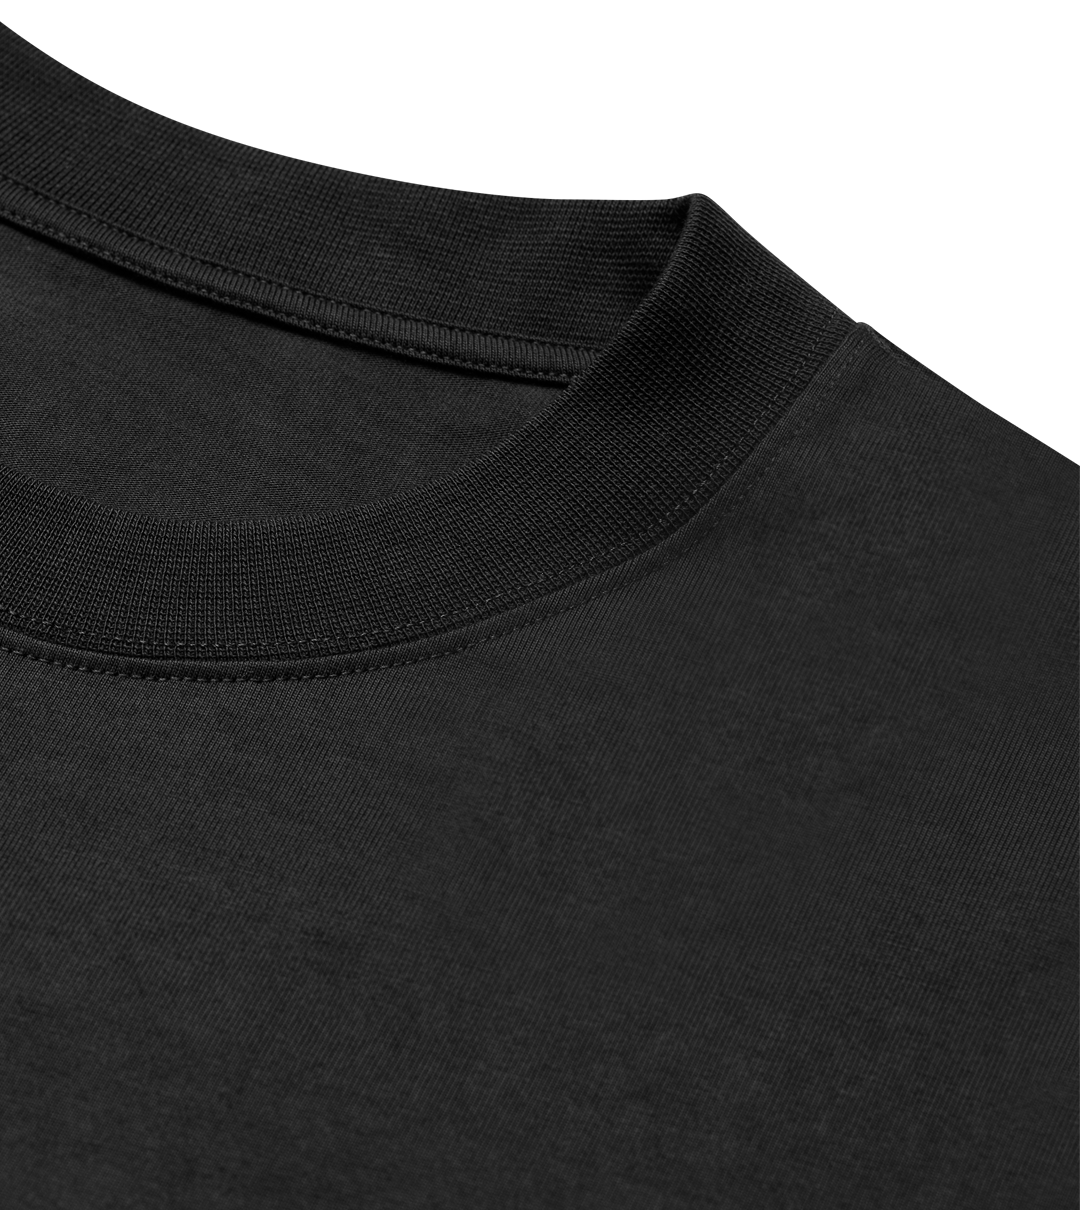 Elementologie Women's Tee Dress 🌸 | Soft 100% Cotton Jersey | Boxy Fit, High Neck, Mid-Thigh Hem - Premium t-shirt_dress from Creator Studio - Just $34.99! Shop now at Elementologie